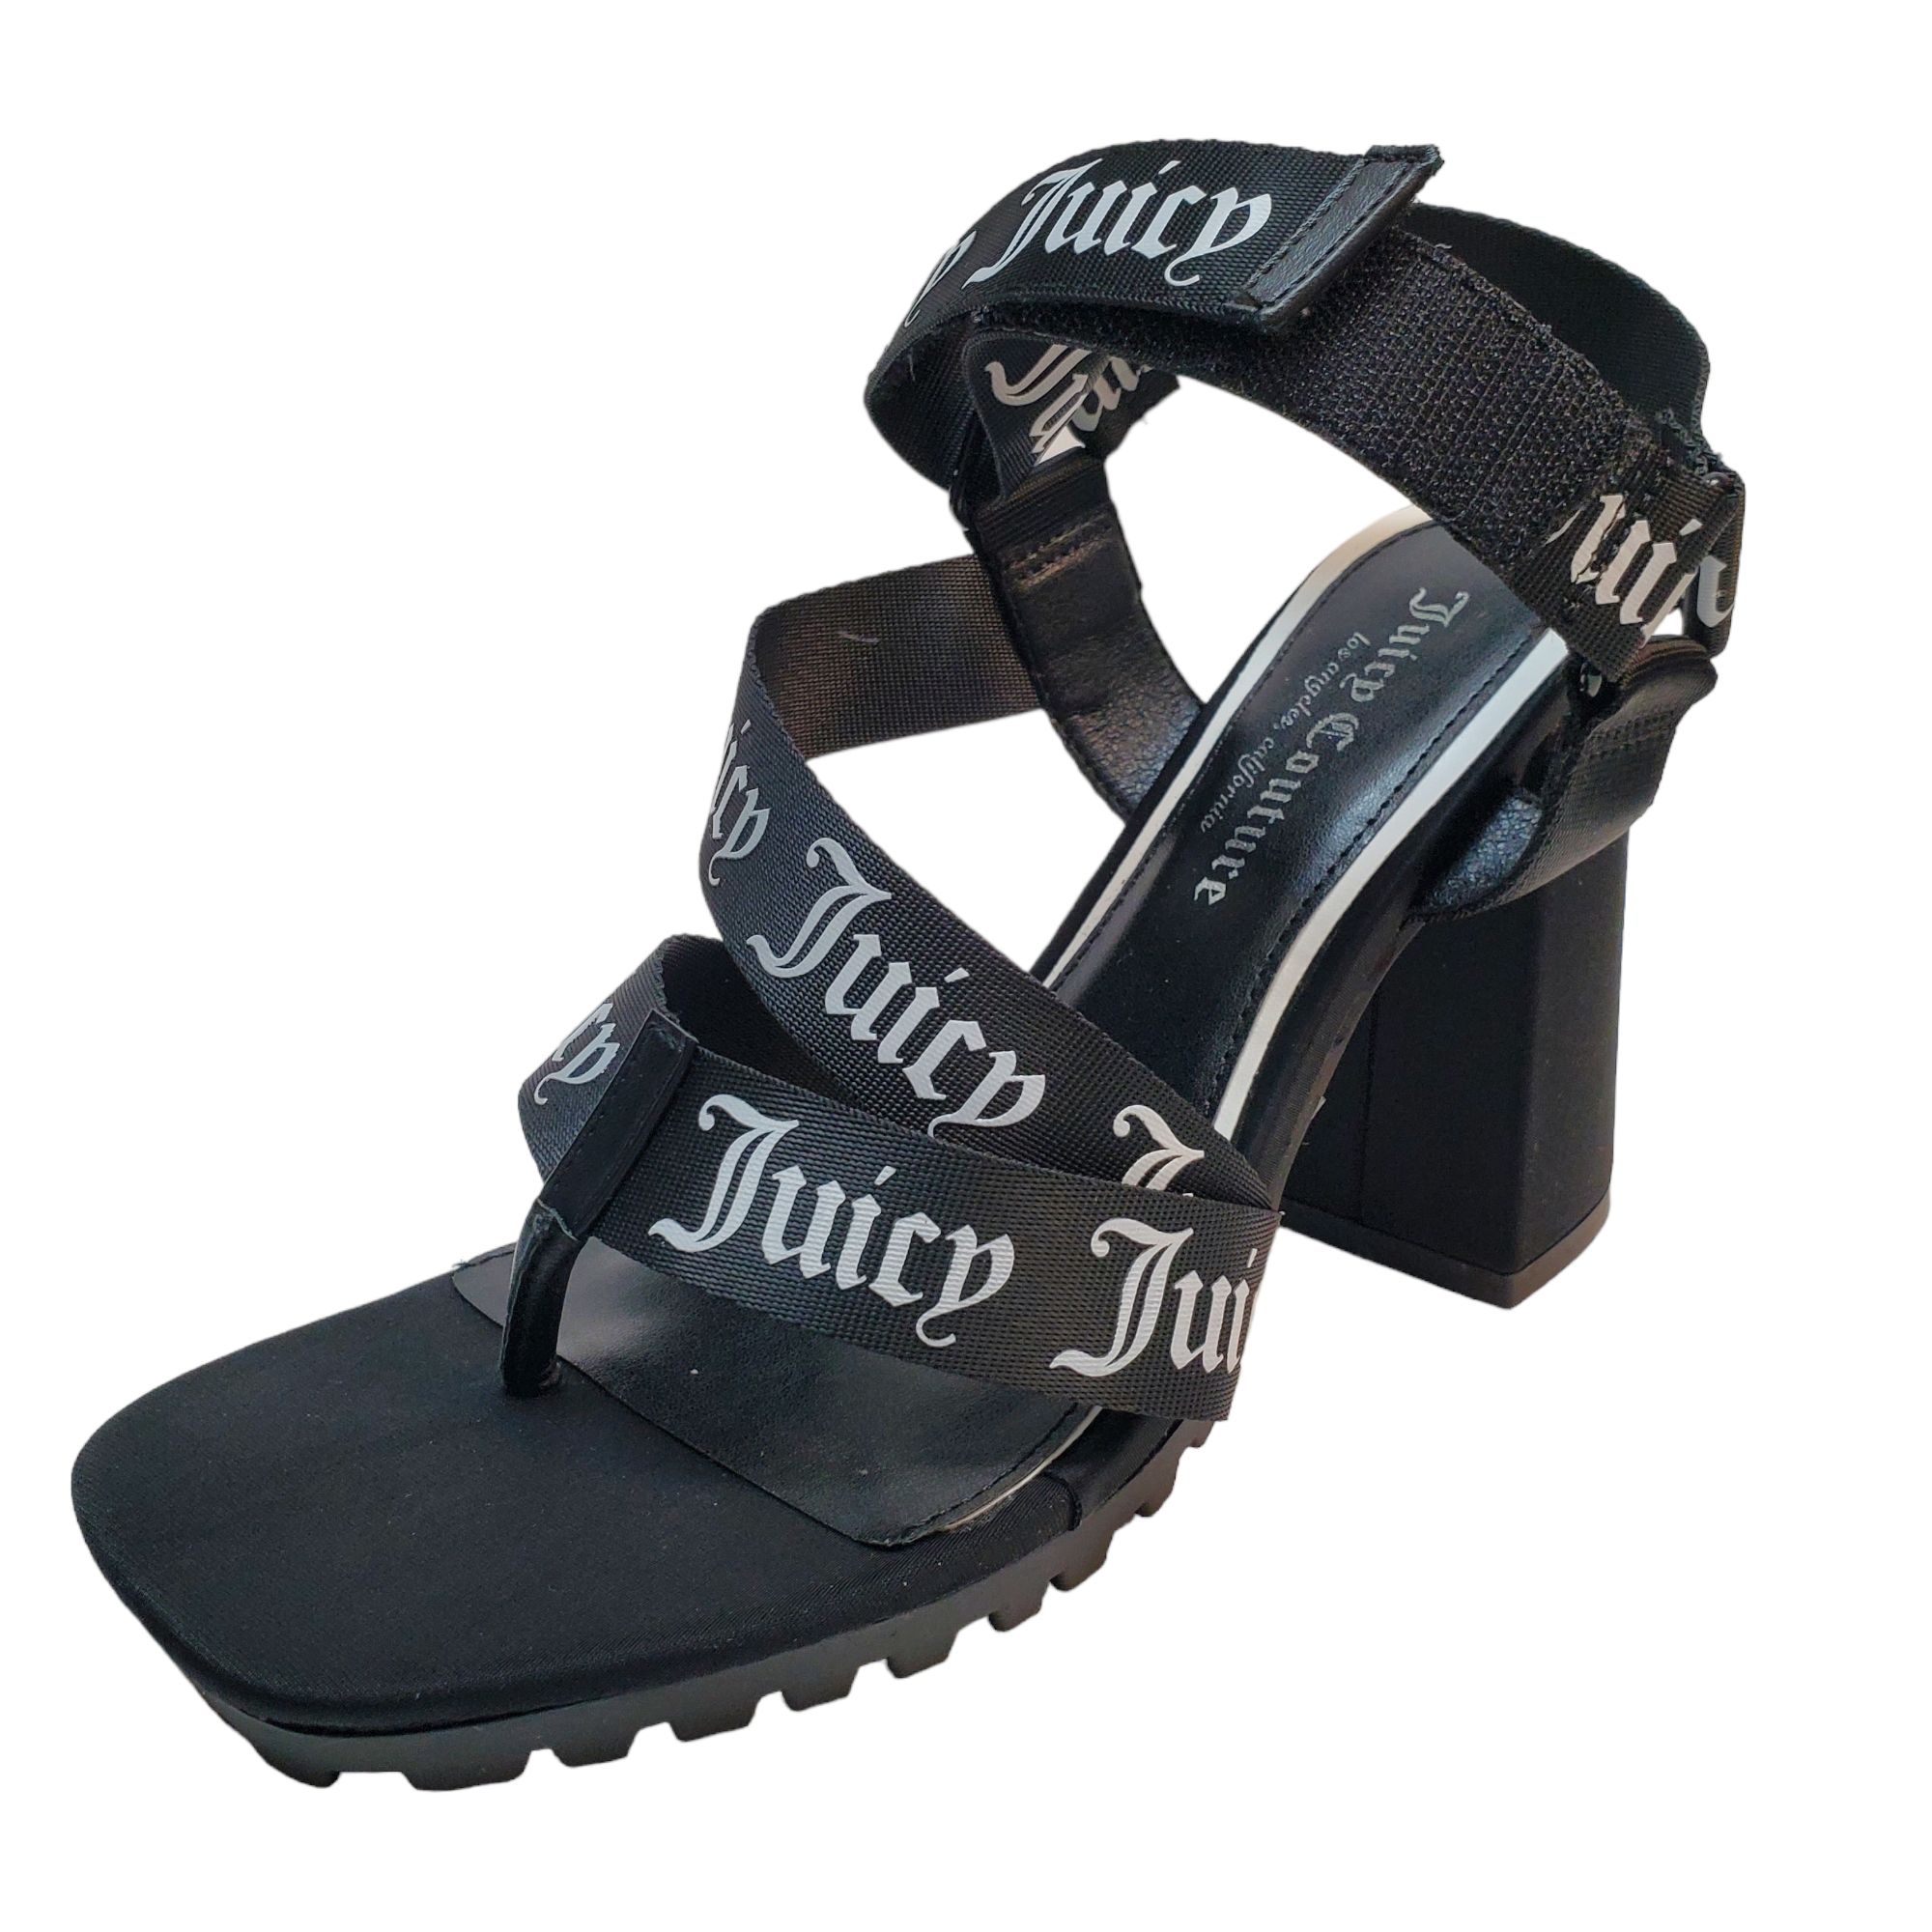 Juicy Couture Women039s Black Flip Flops Rhinestone Shine Size 9M  eBay